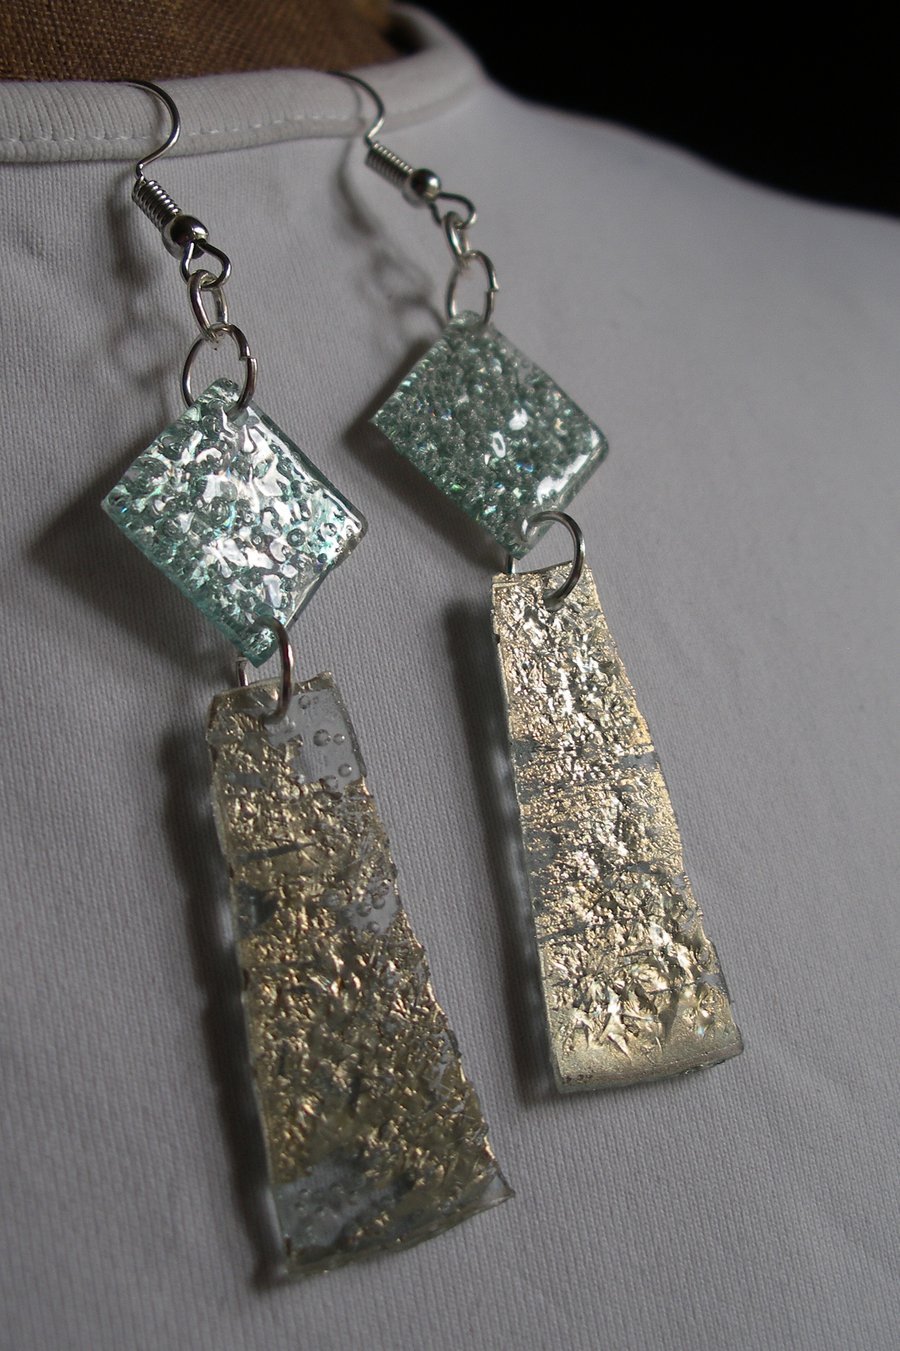 Sea green and silver drop earrings.